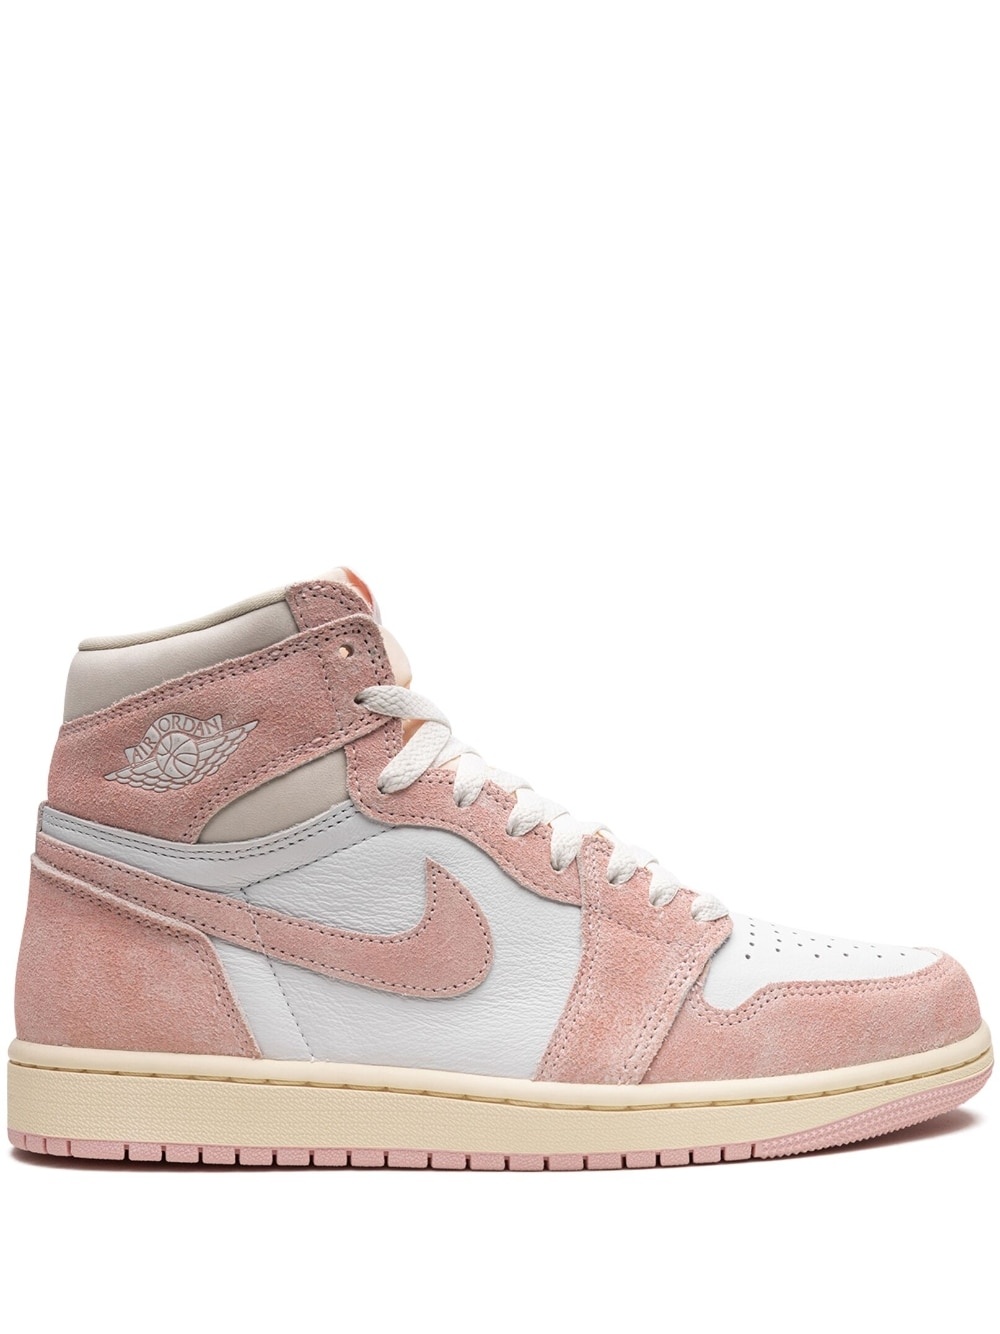 Air Jordan 1 "Washed Pink" sneakers - 1